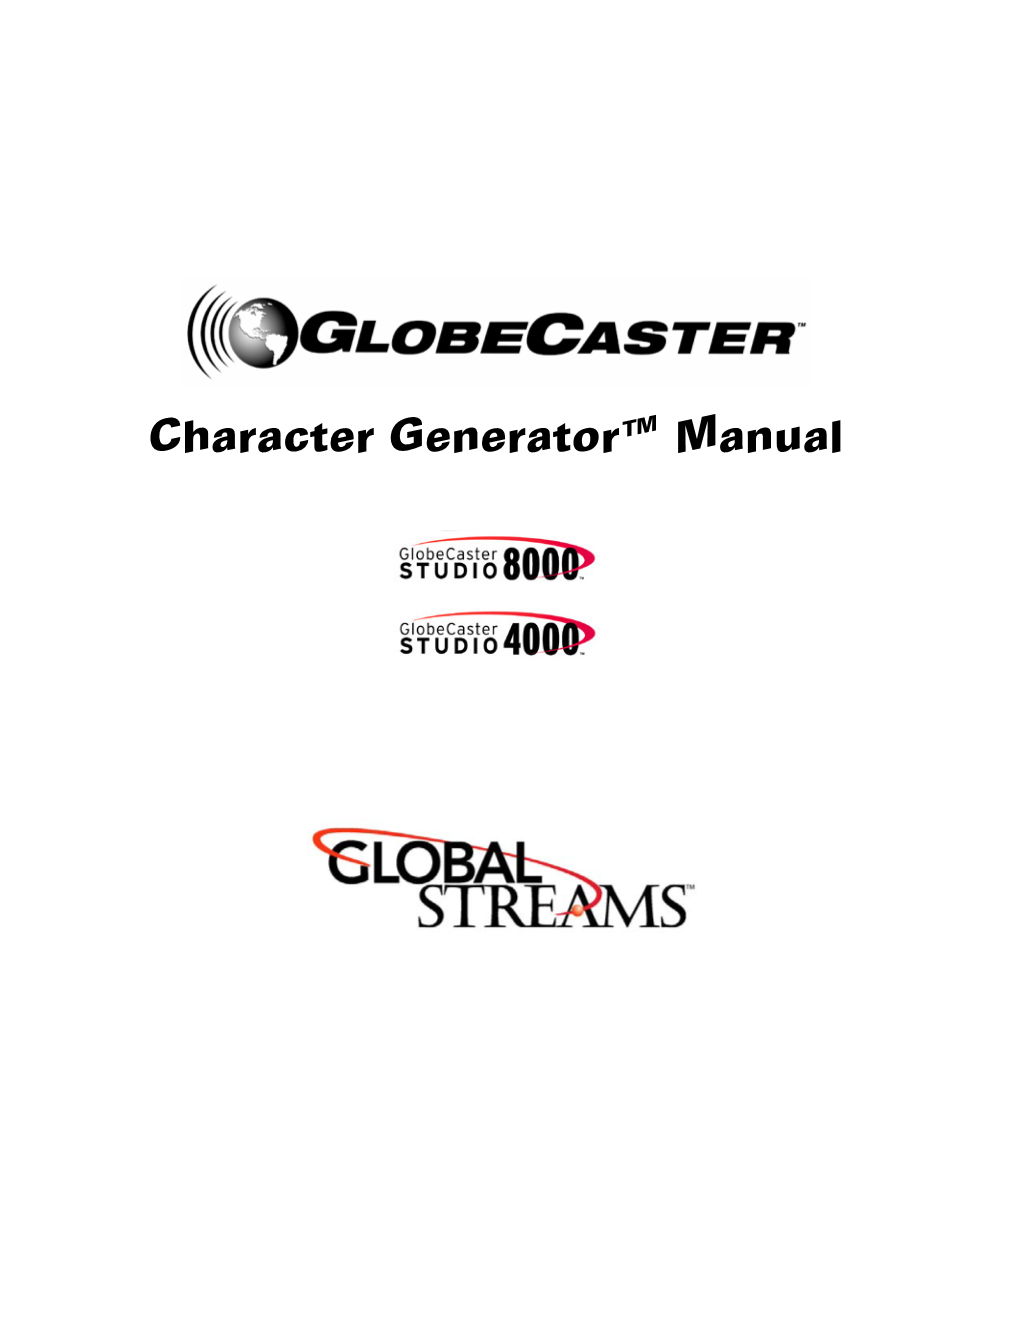 Character Generator™ Manual Copyrights